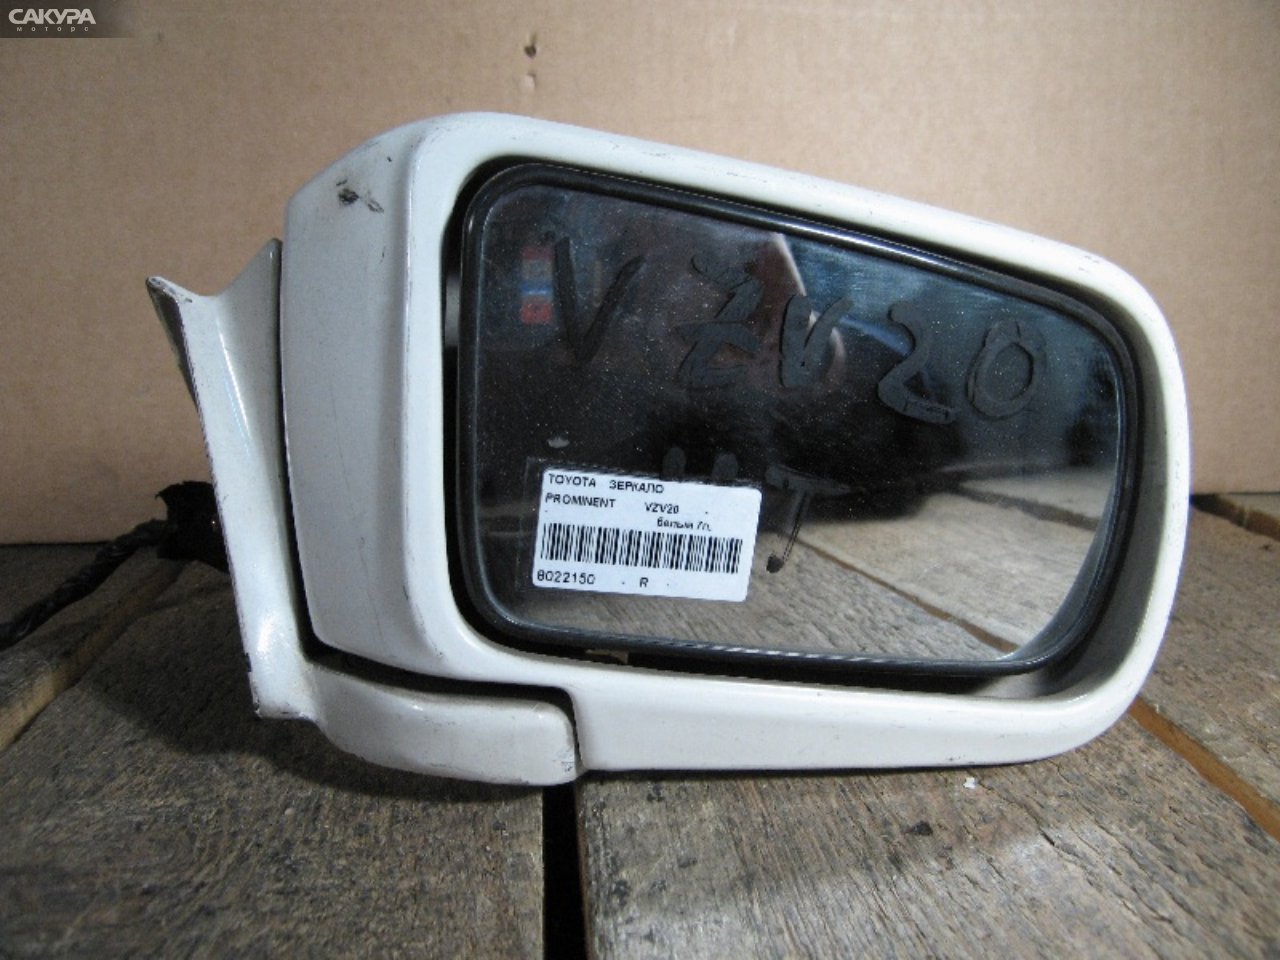 Зеркало боковое правое Toyota Camry Prominent VZV20: купить в Сакура Абакан.